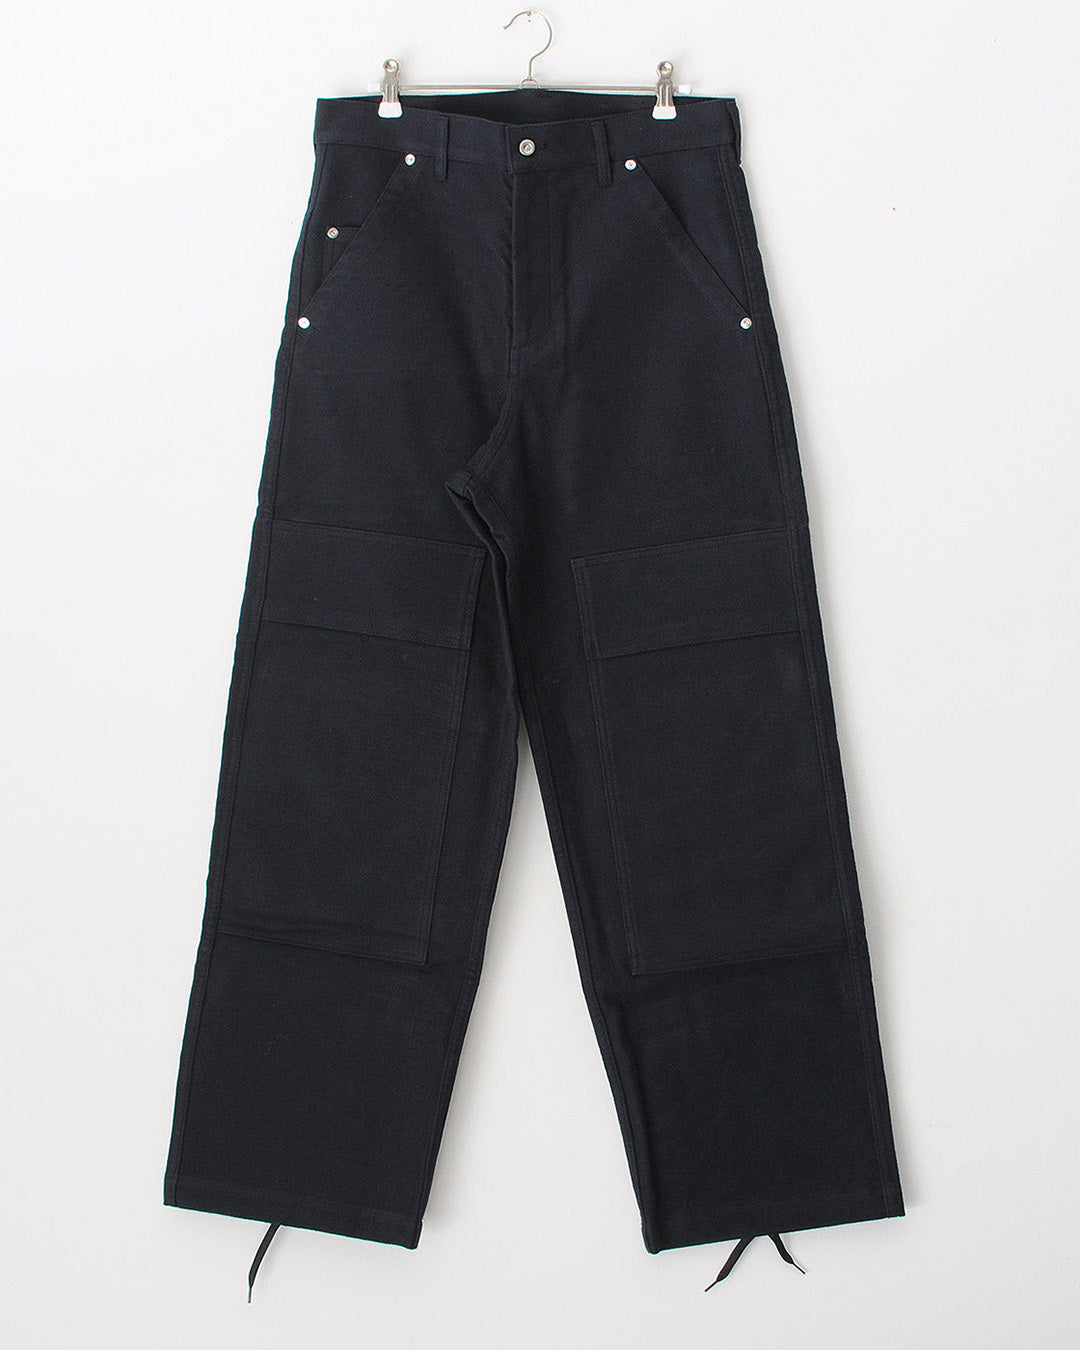 TUKI double knee pants / navy blue / cotton melton